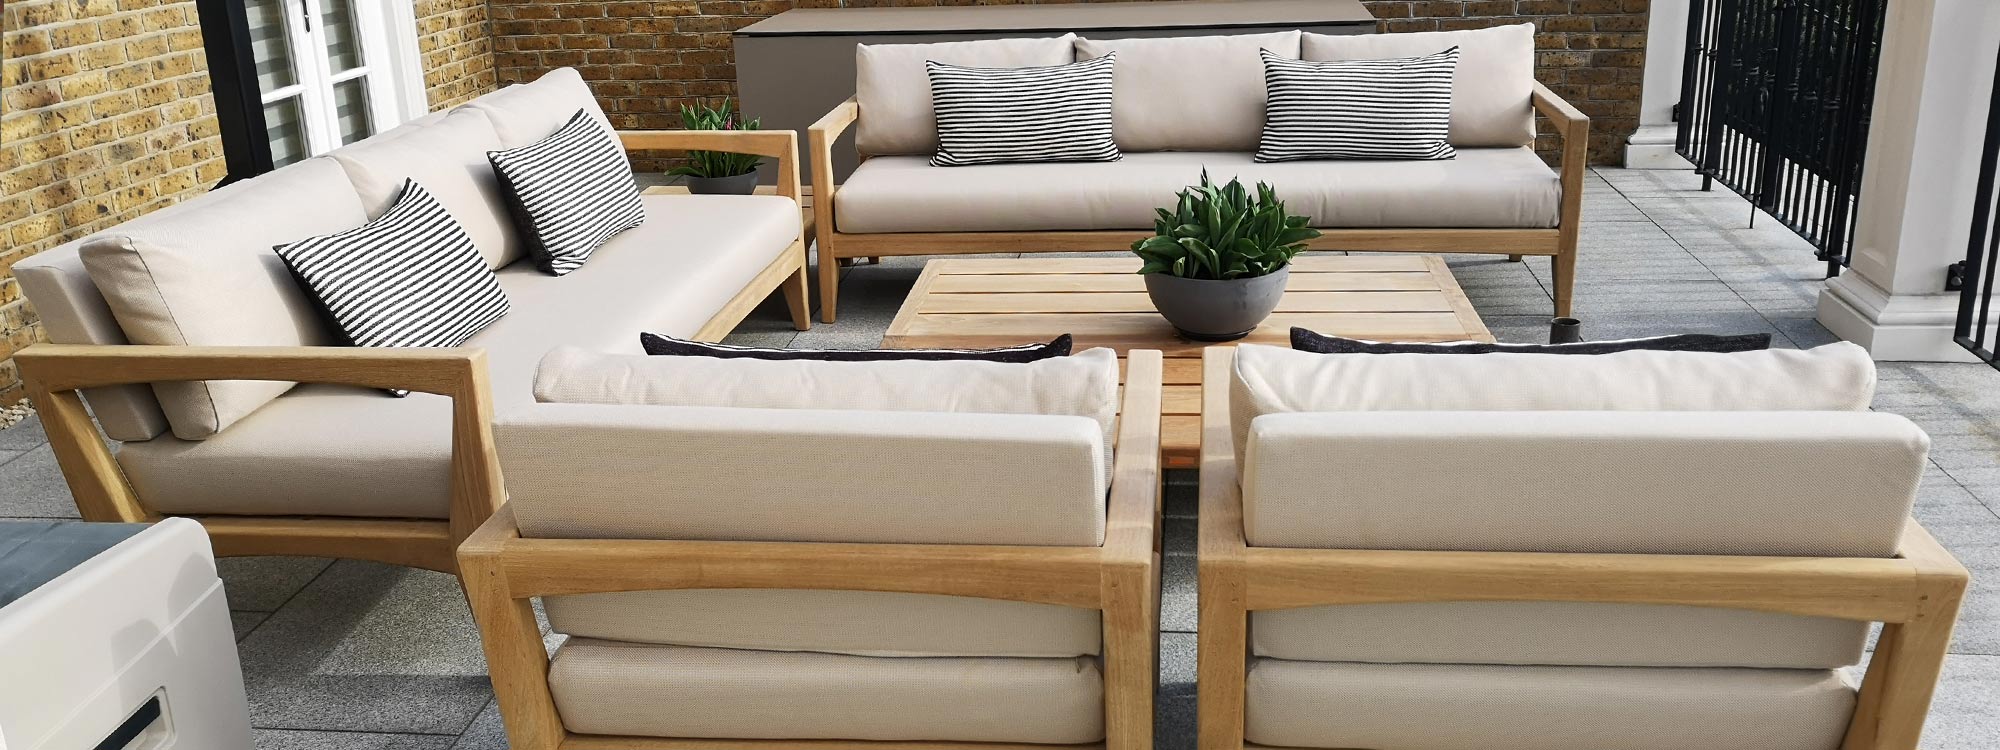 Image of chunky teak luxury garden sofa installation UK